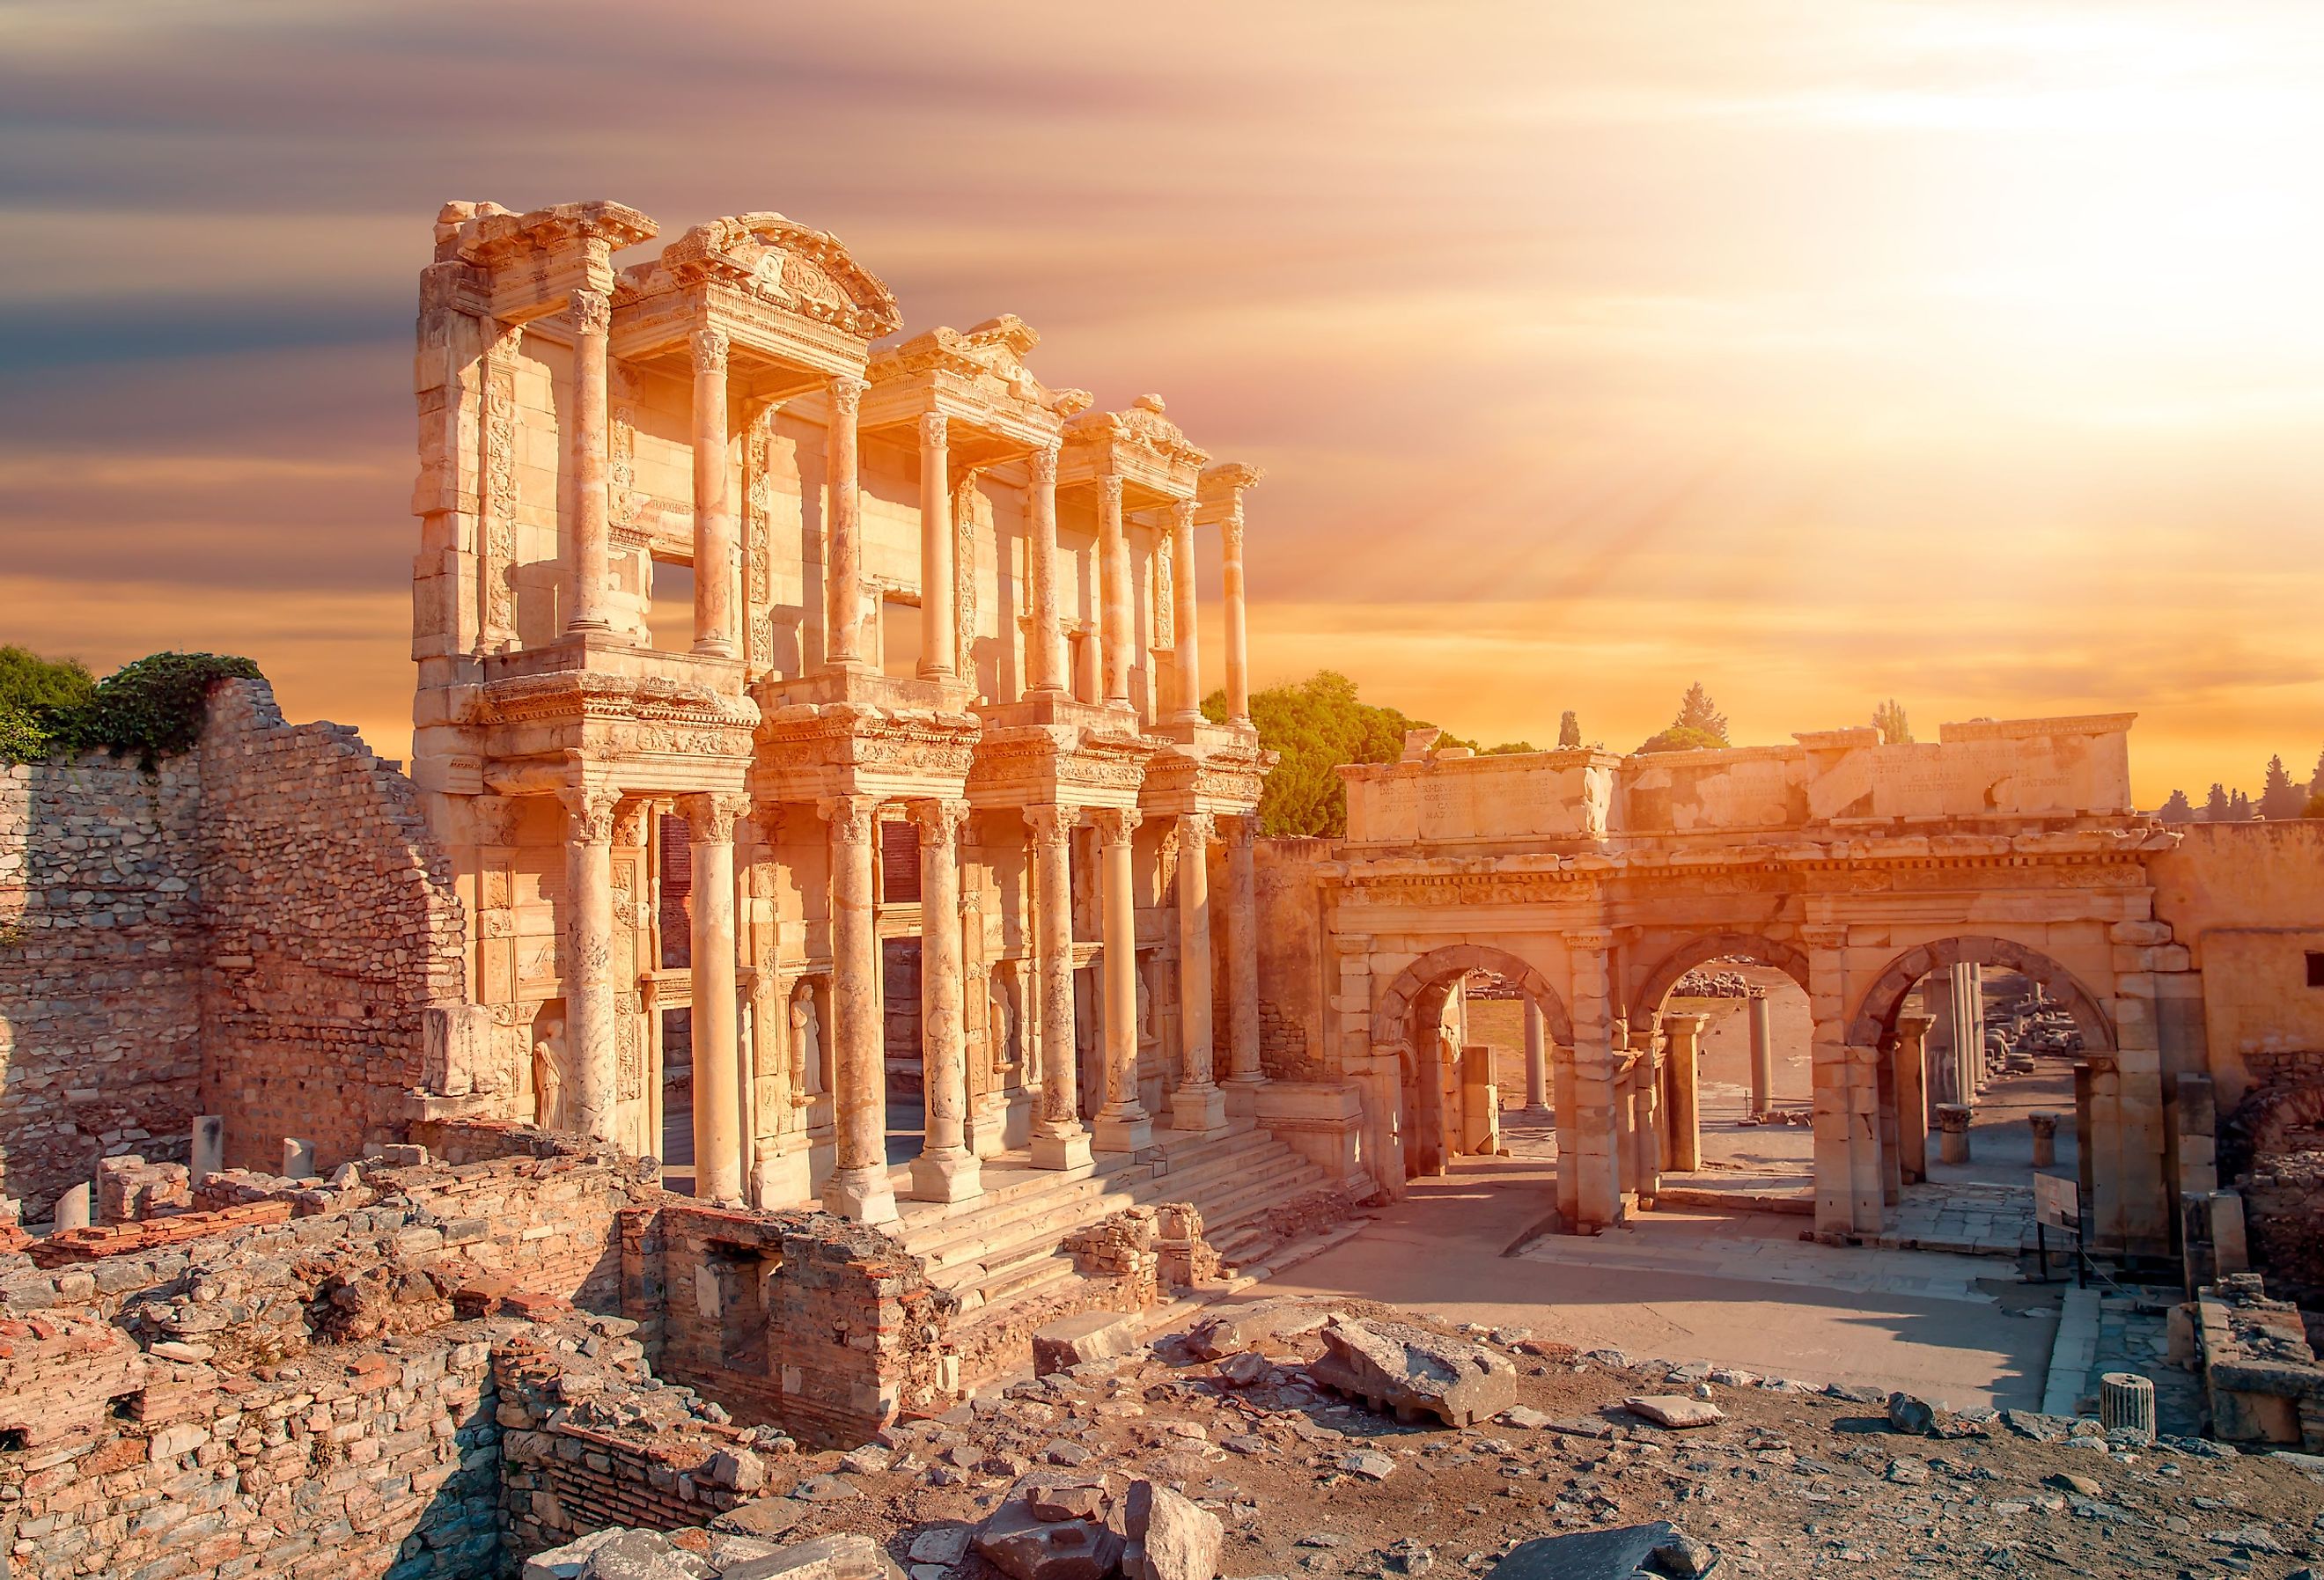 Celsus Library in Ephesus, Turkey. Image credit muratart via shutterstock